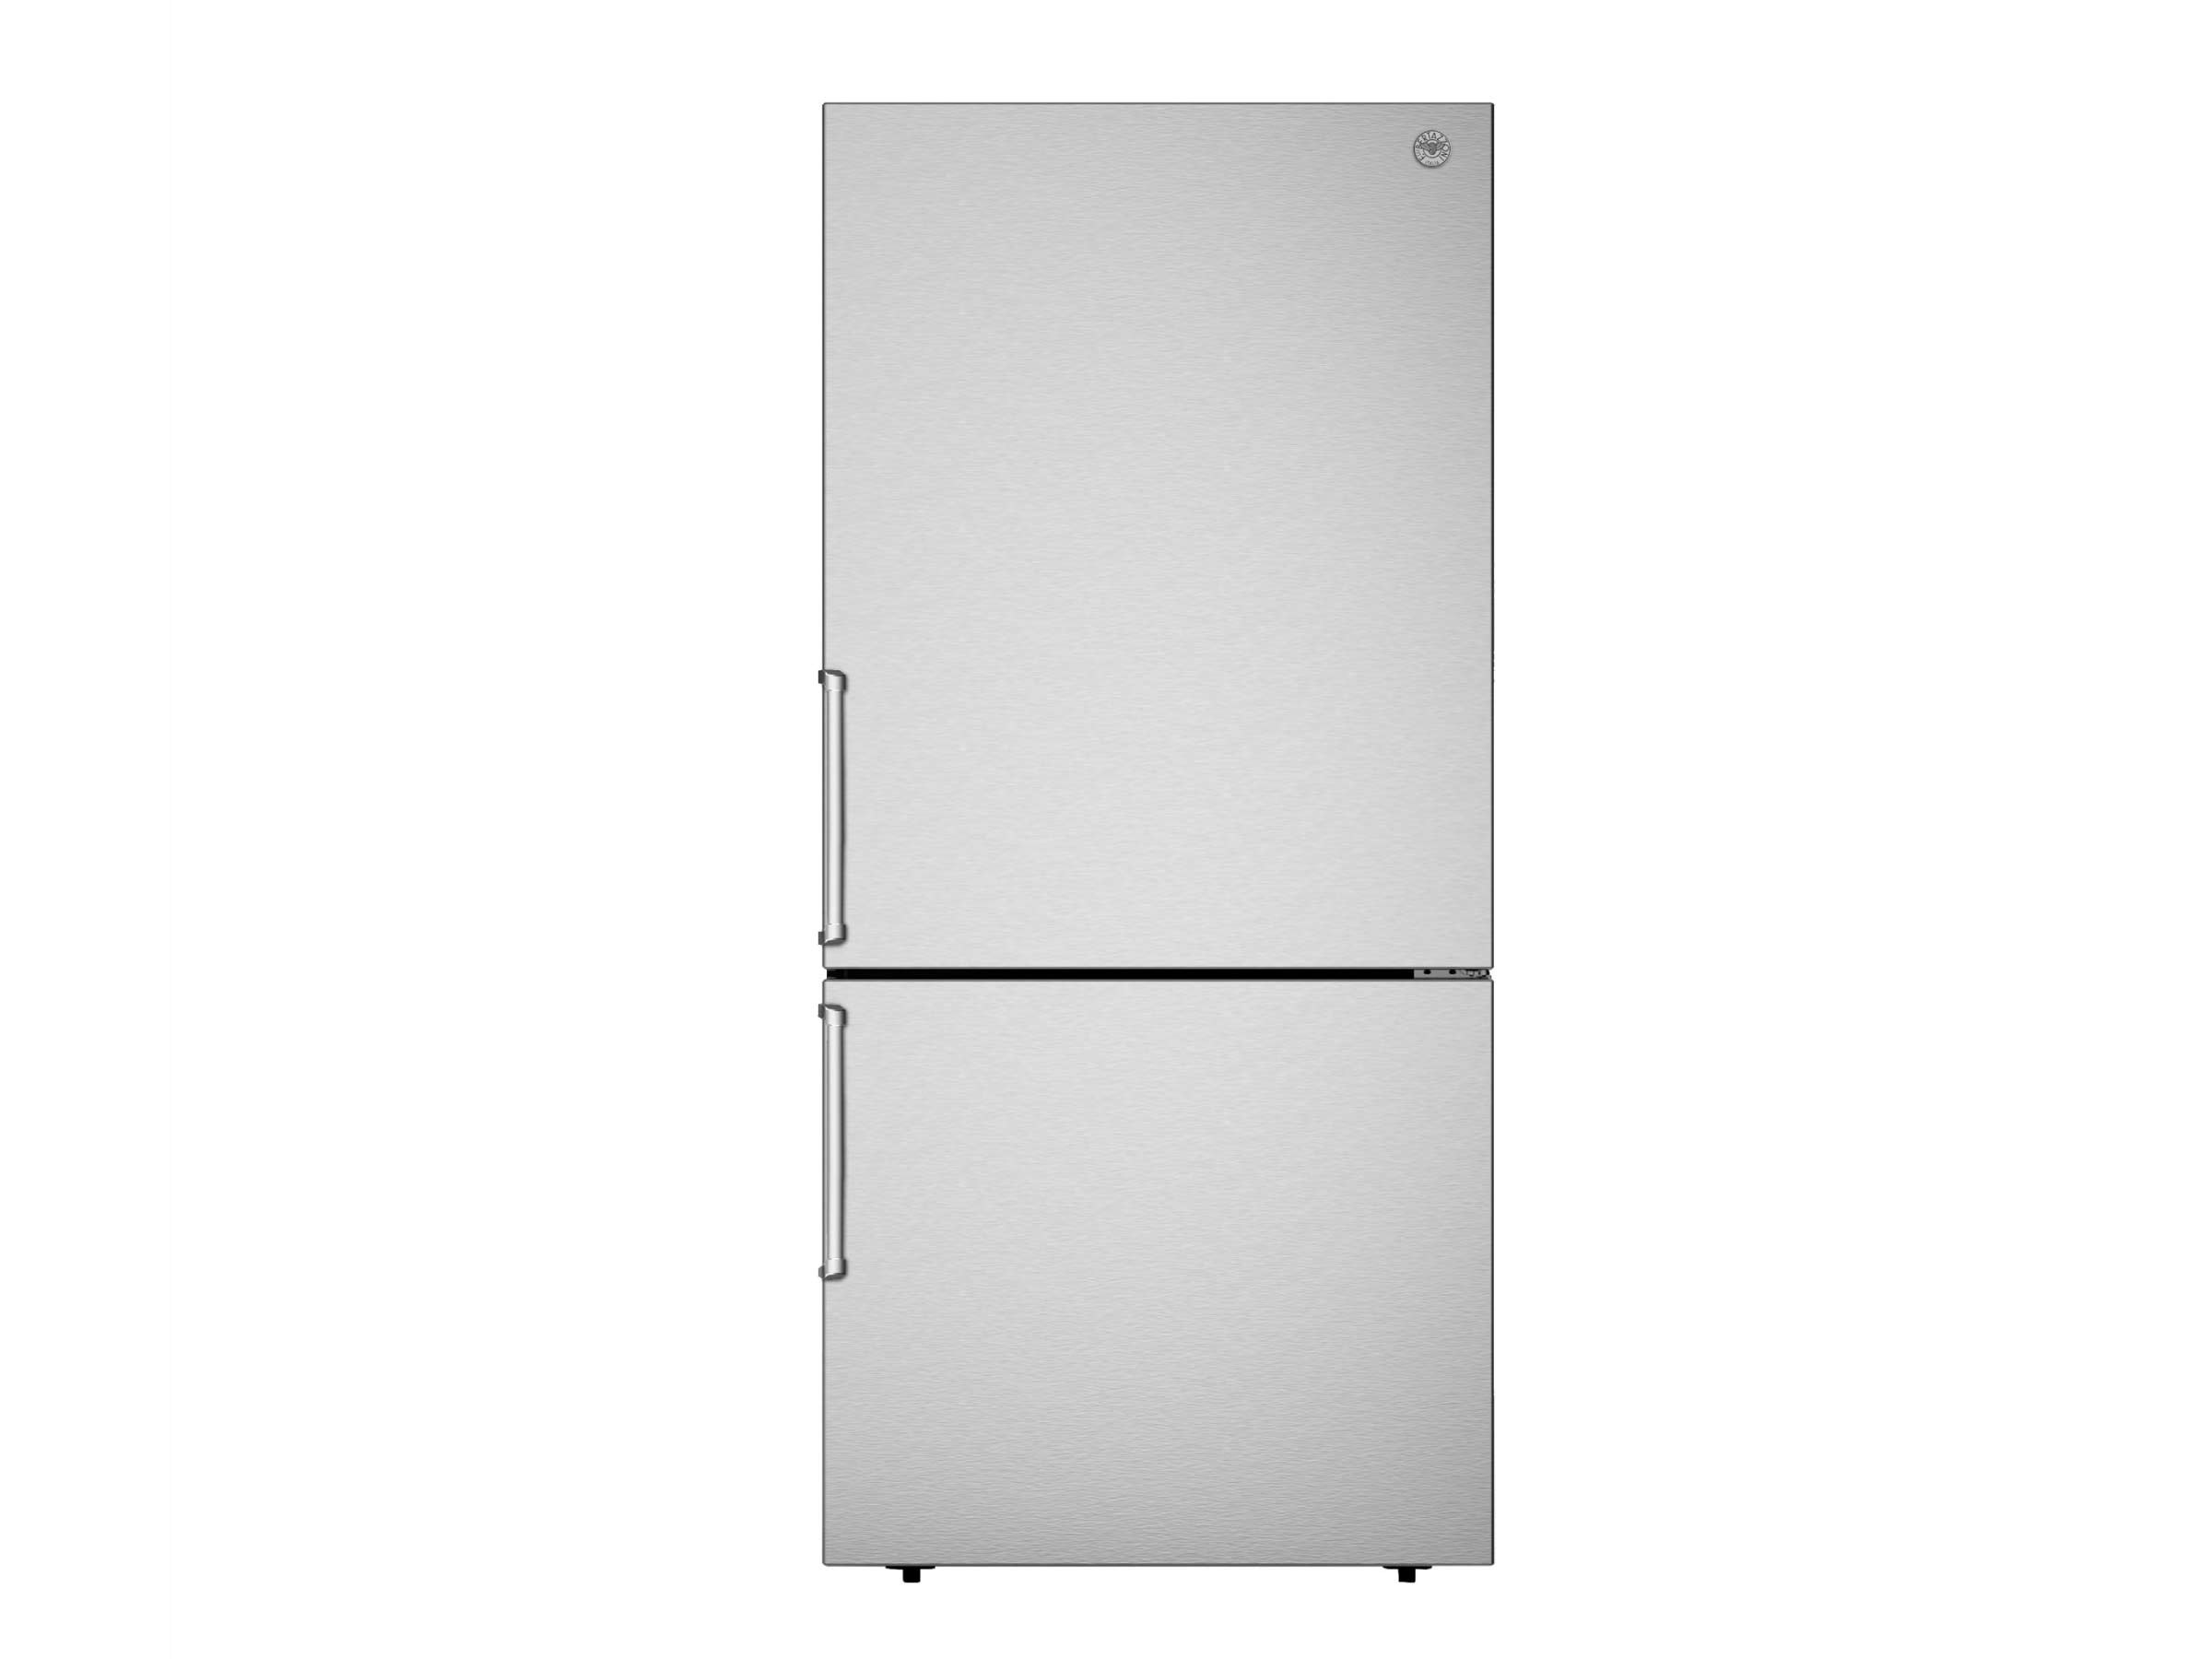 12+ Bertazzoni refrigerator installation instructions ideas in 2021 